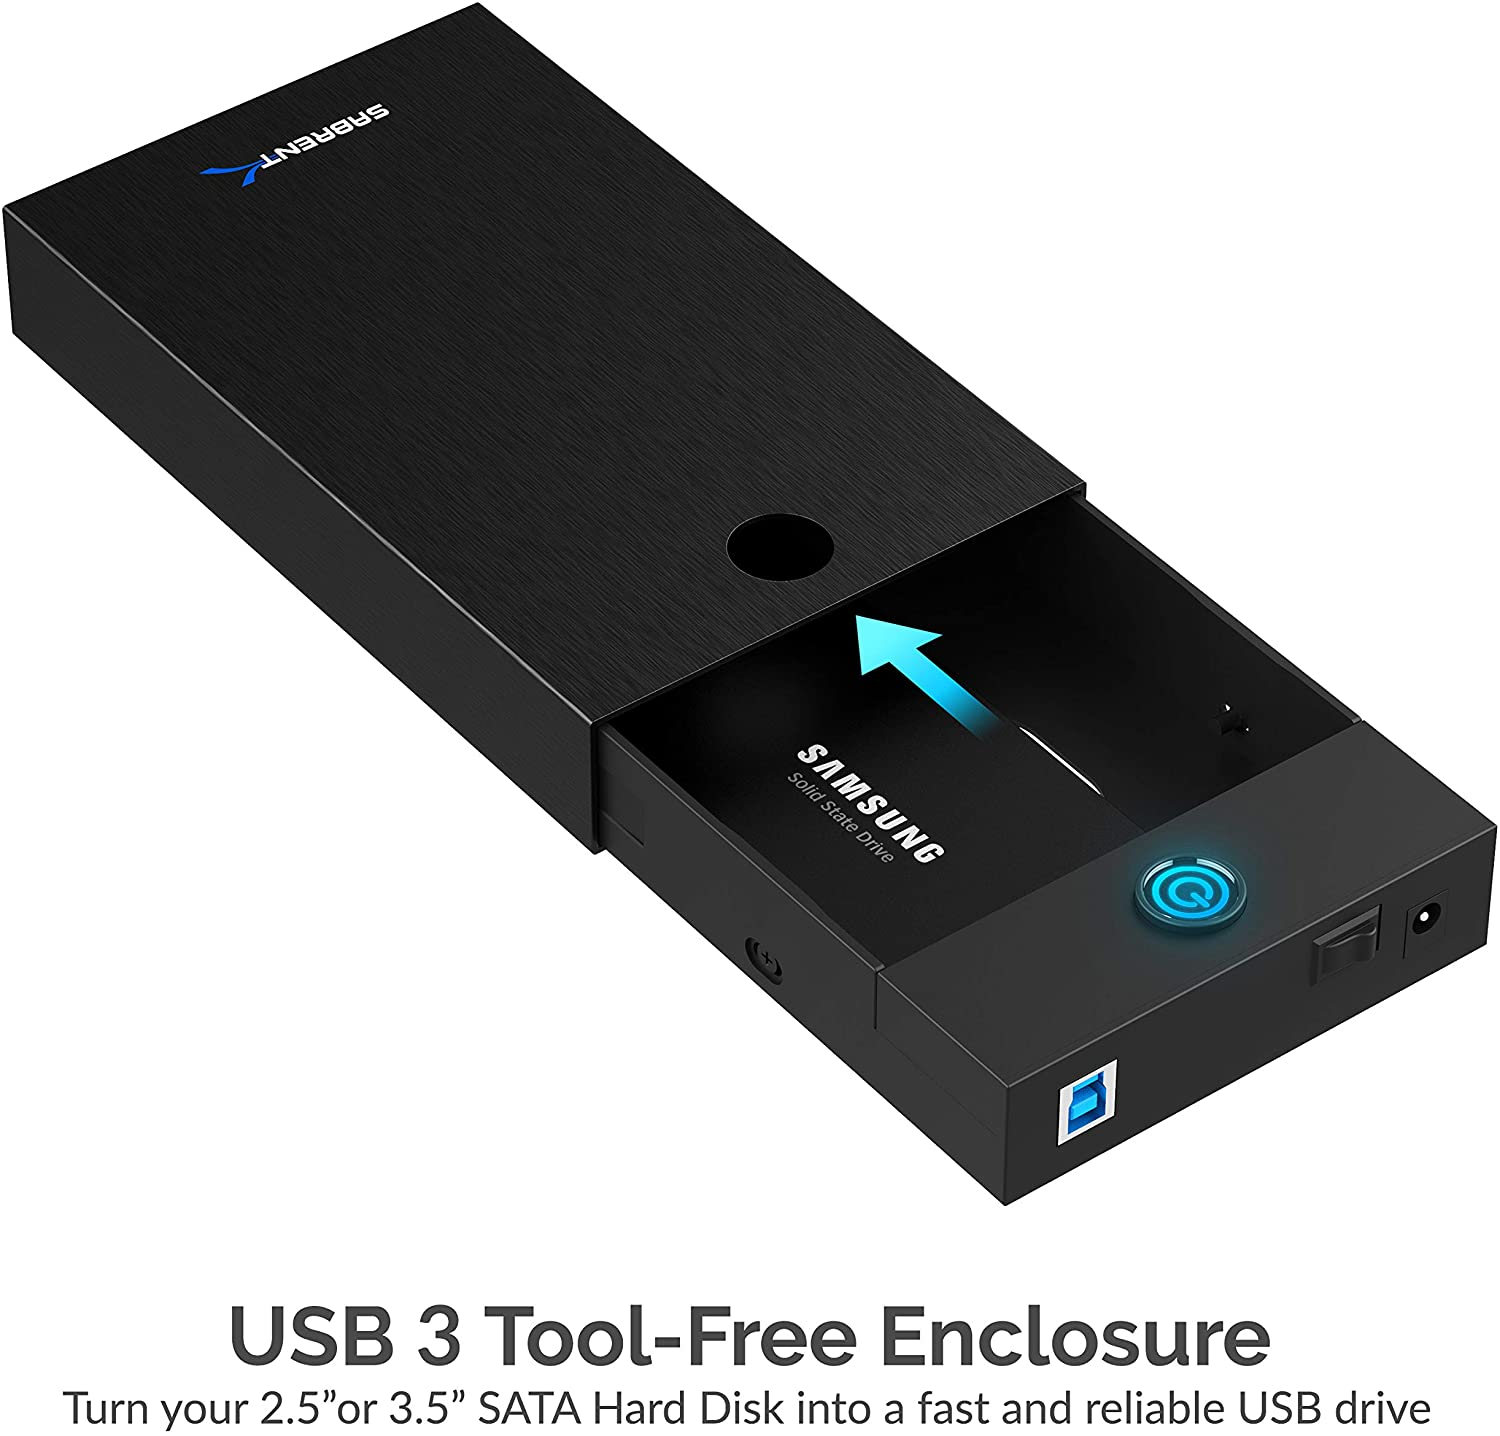 SABRENT USB 3.0 Tool Free Enclosure for 2.5” and 3.5” Internal SATA Hard Drives (EC-KSL3)